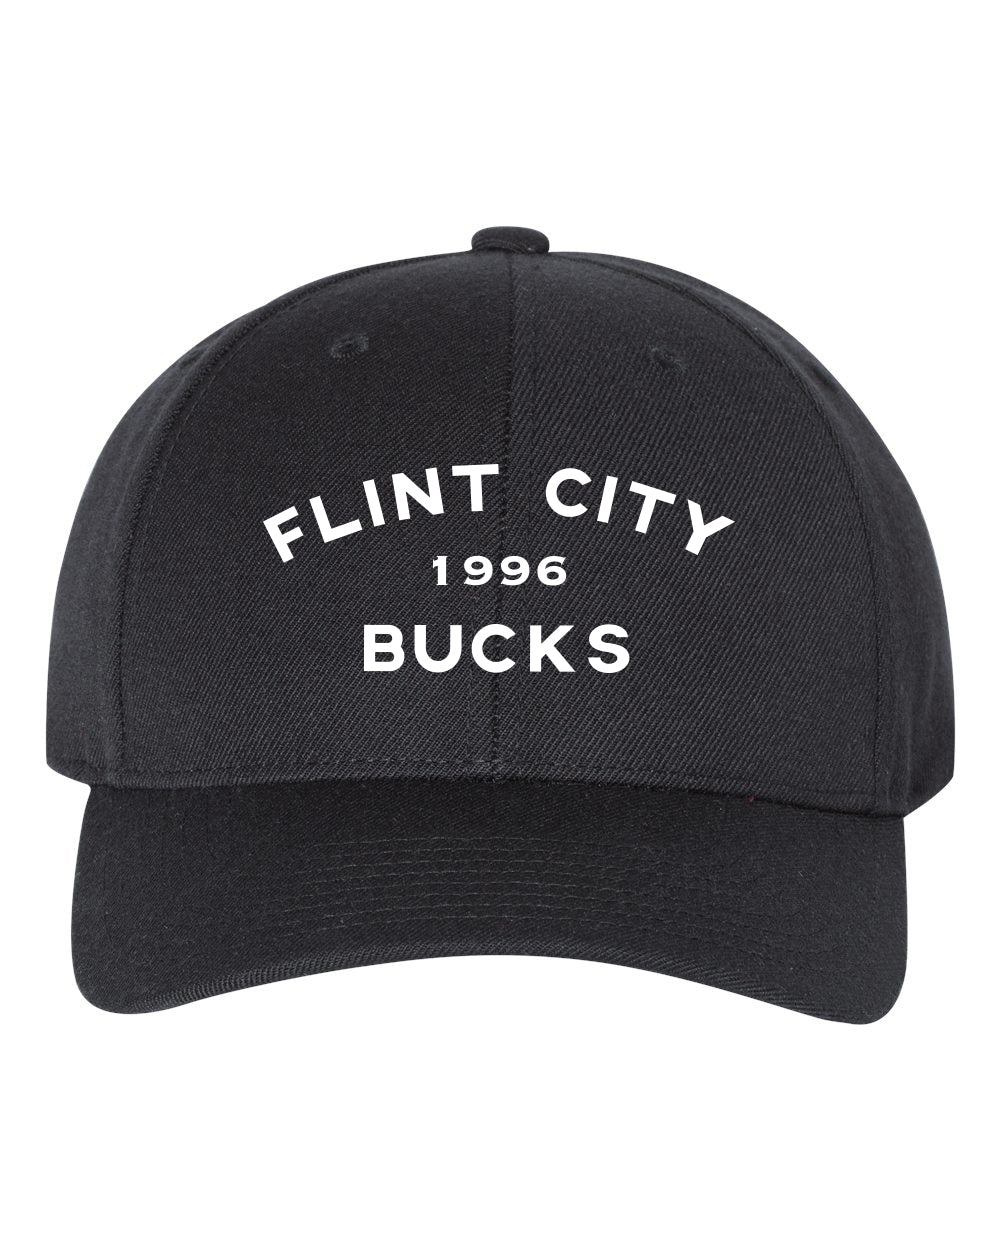 Flint City Bucks 1996 Curved Bill Hat